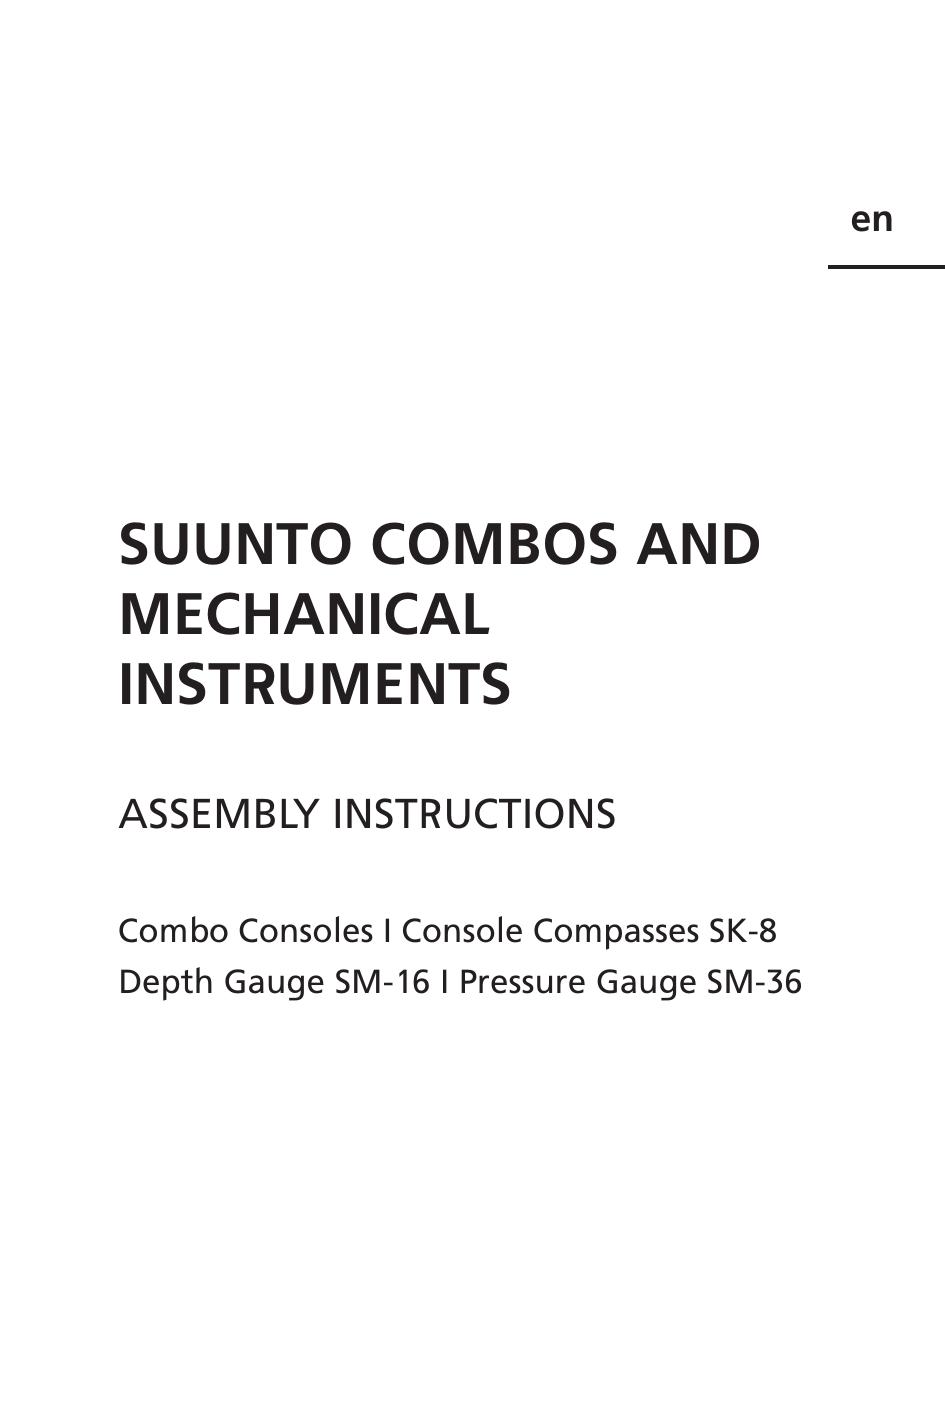 Suunto SS005502000 Scuba Diving Equipment User Manual